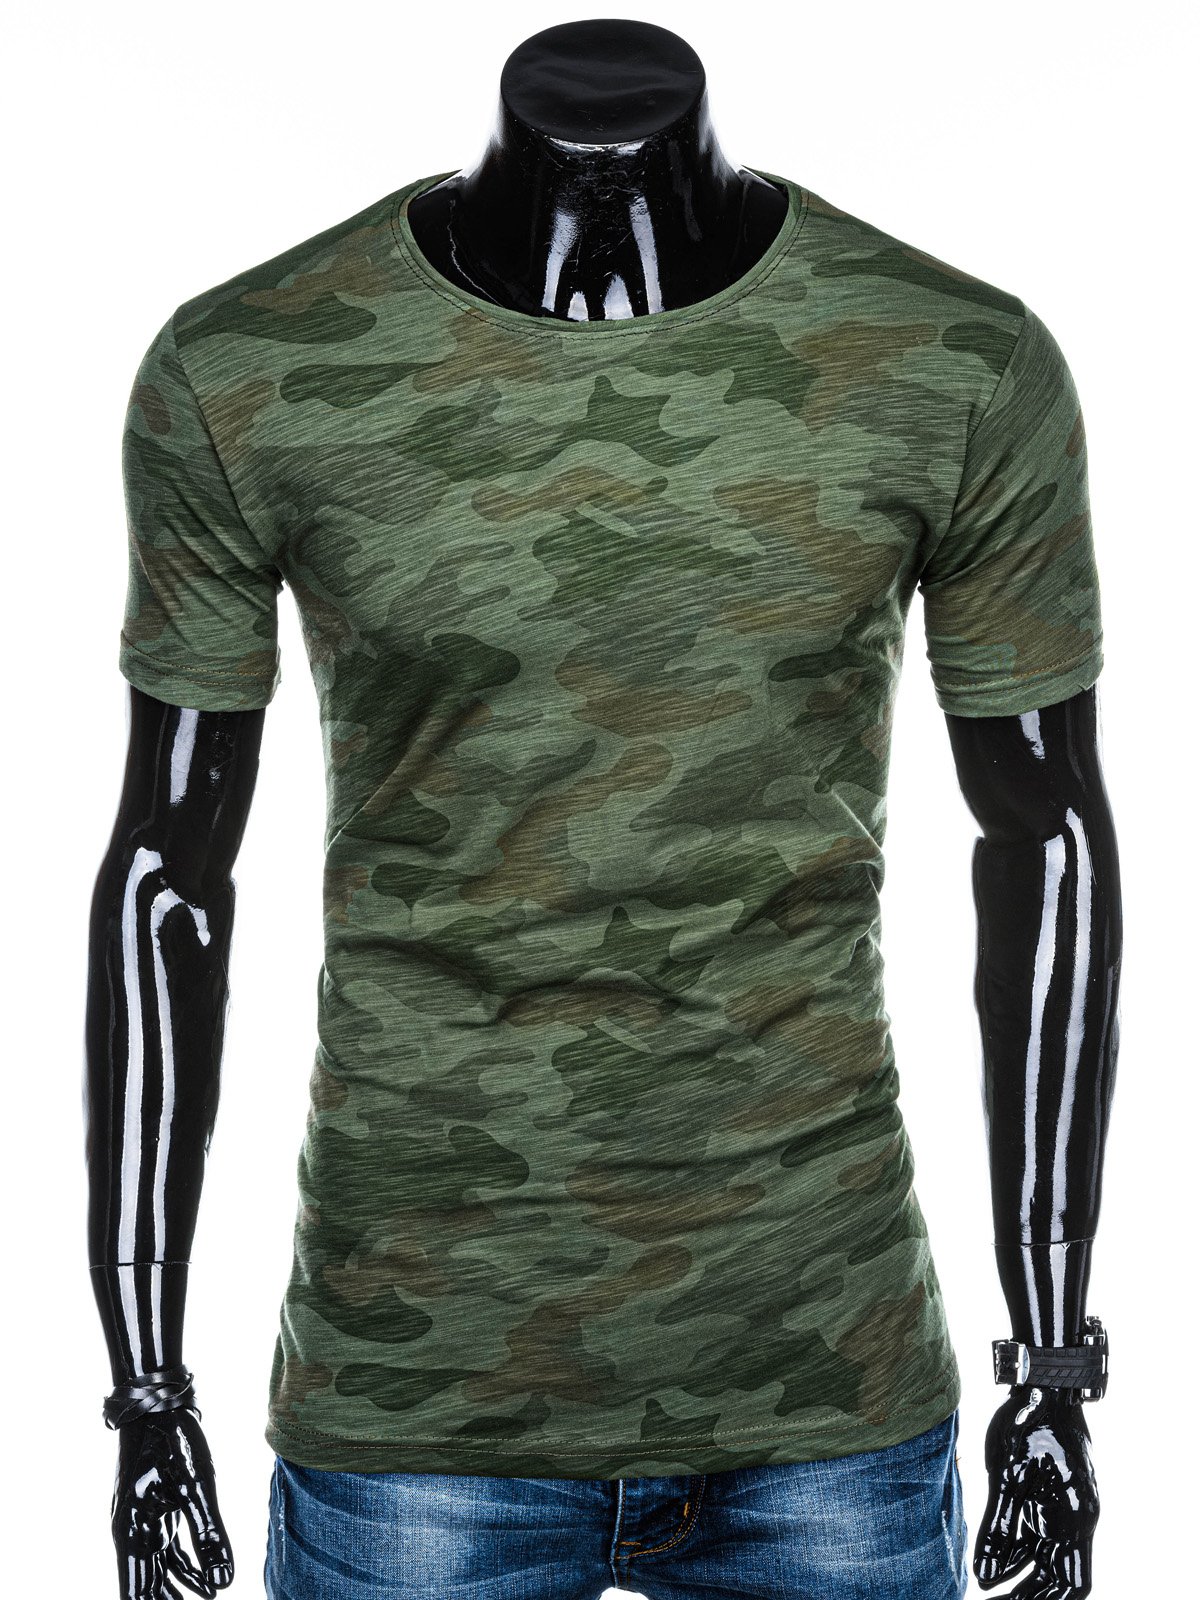 Men's printed t-shirt S1203 - green/camo | MODONE wholesale - Clothing ...